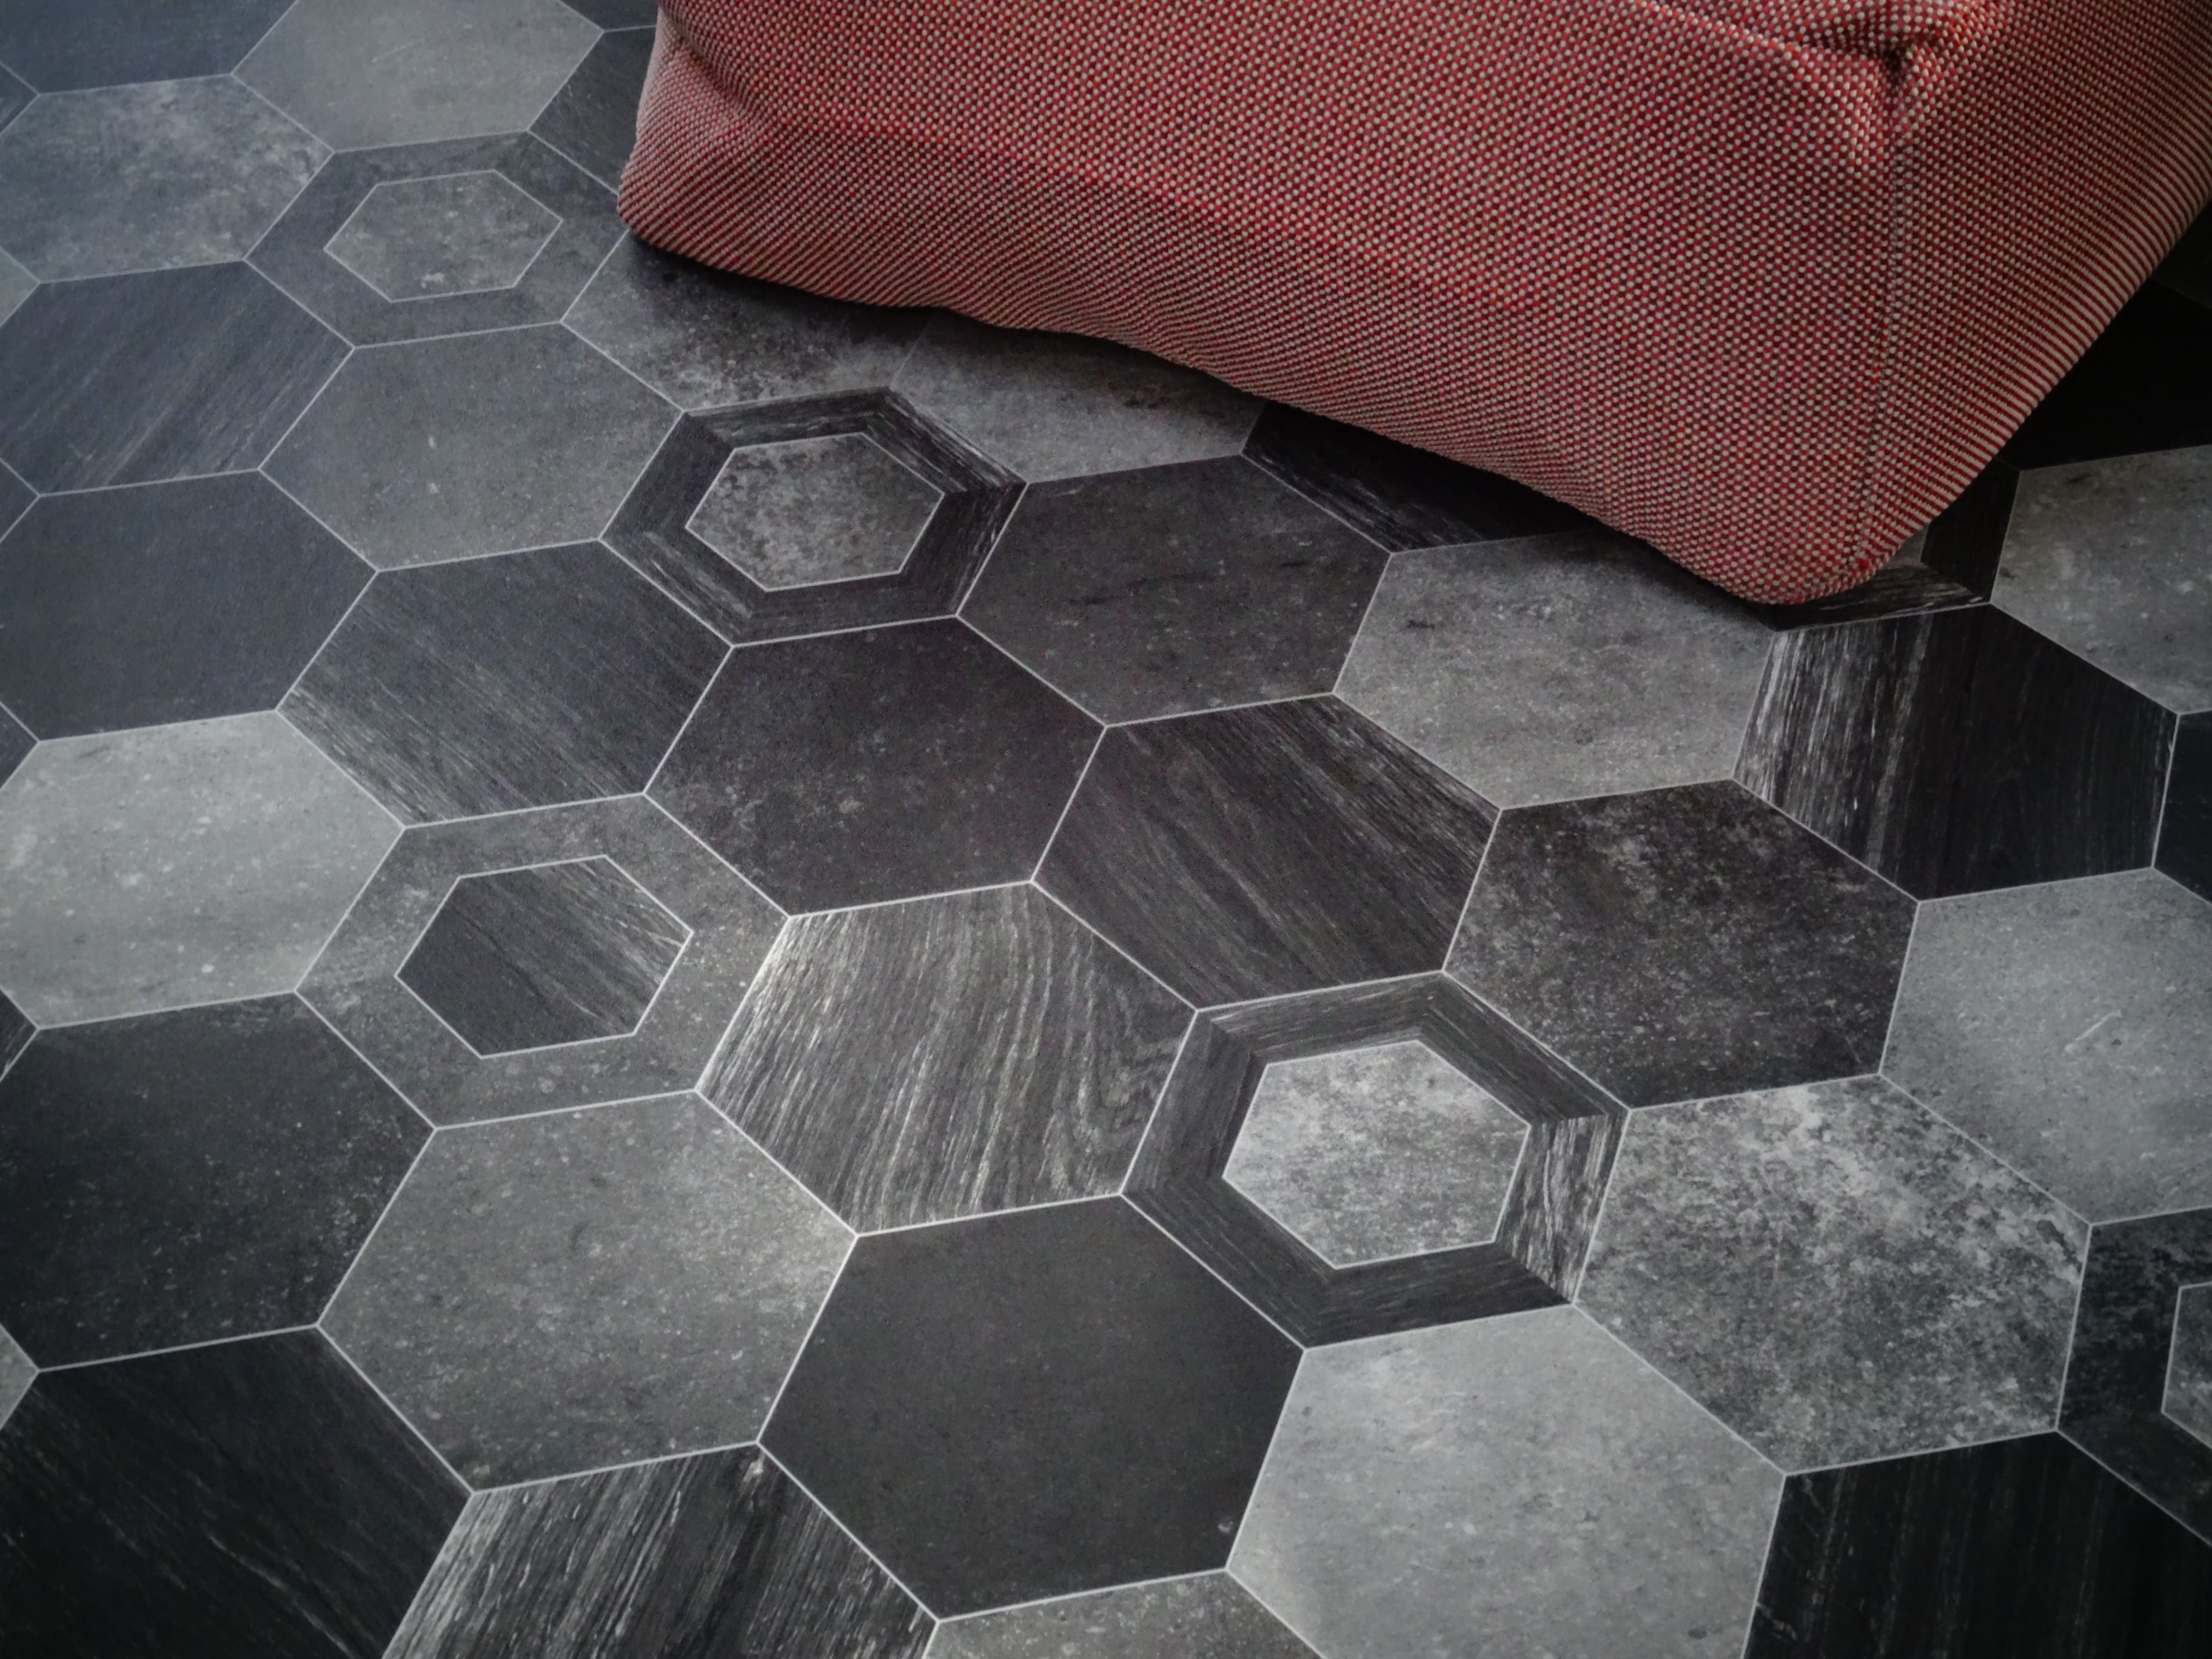 PVC flooring in vintage honeycomb design